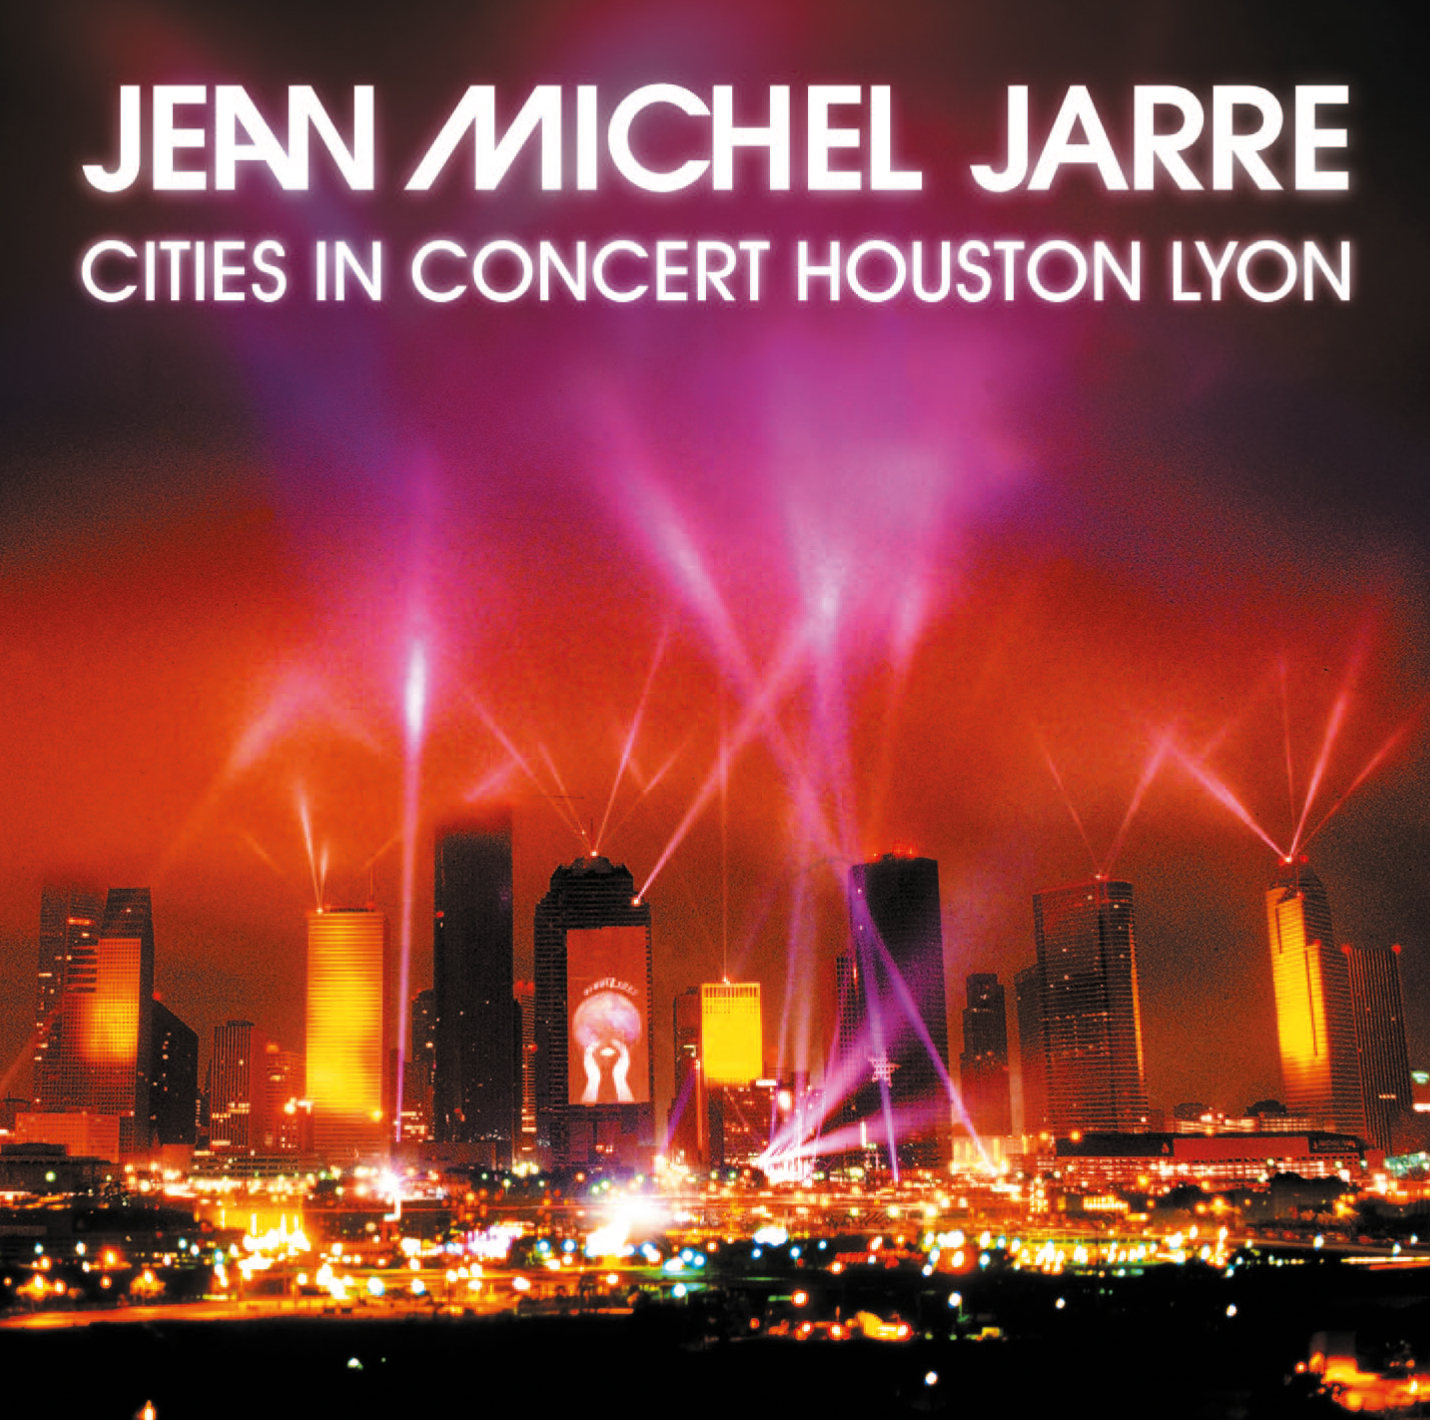 Jean-Michel Jarre discography - Wikipedia